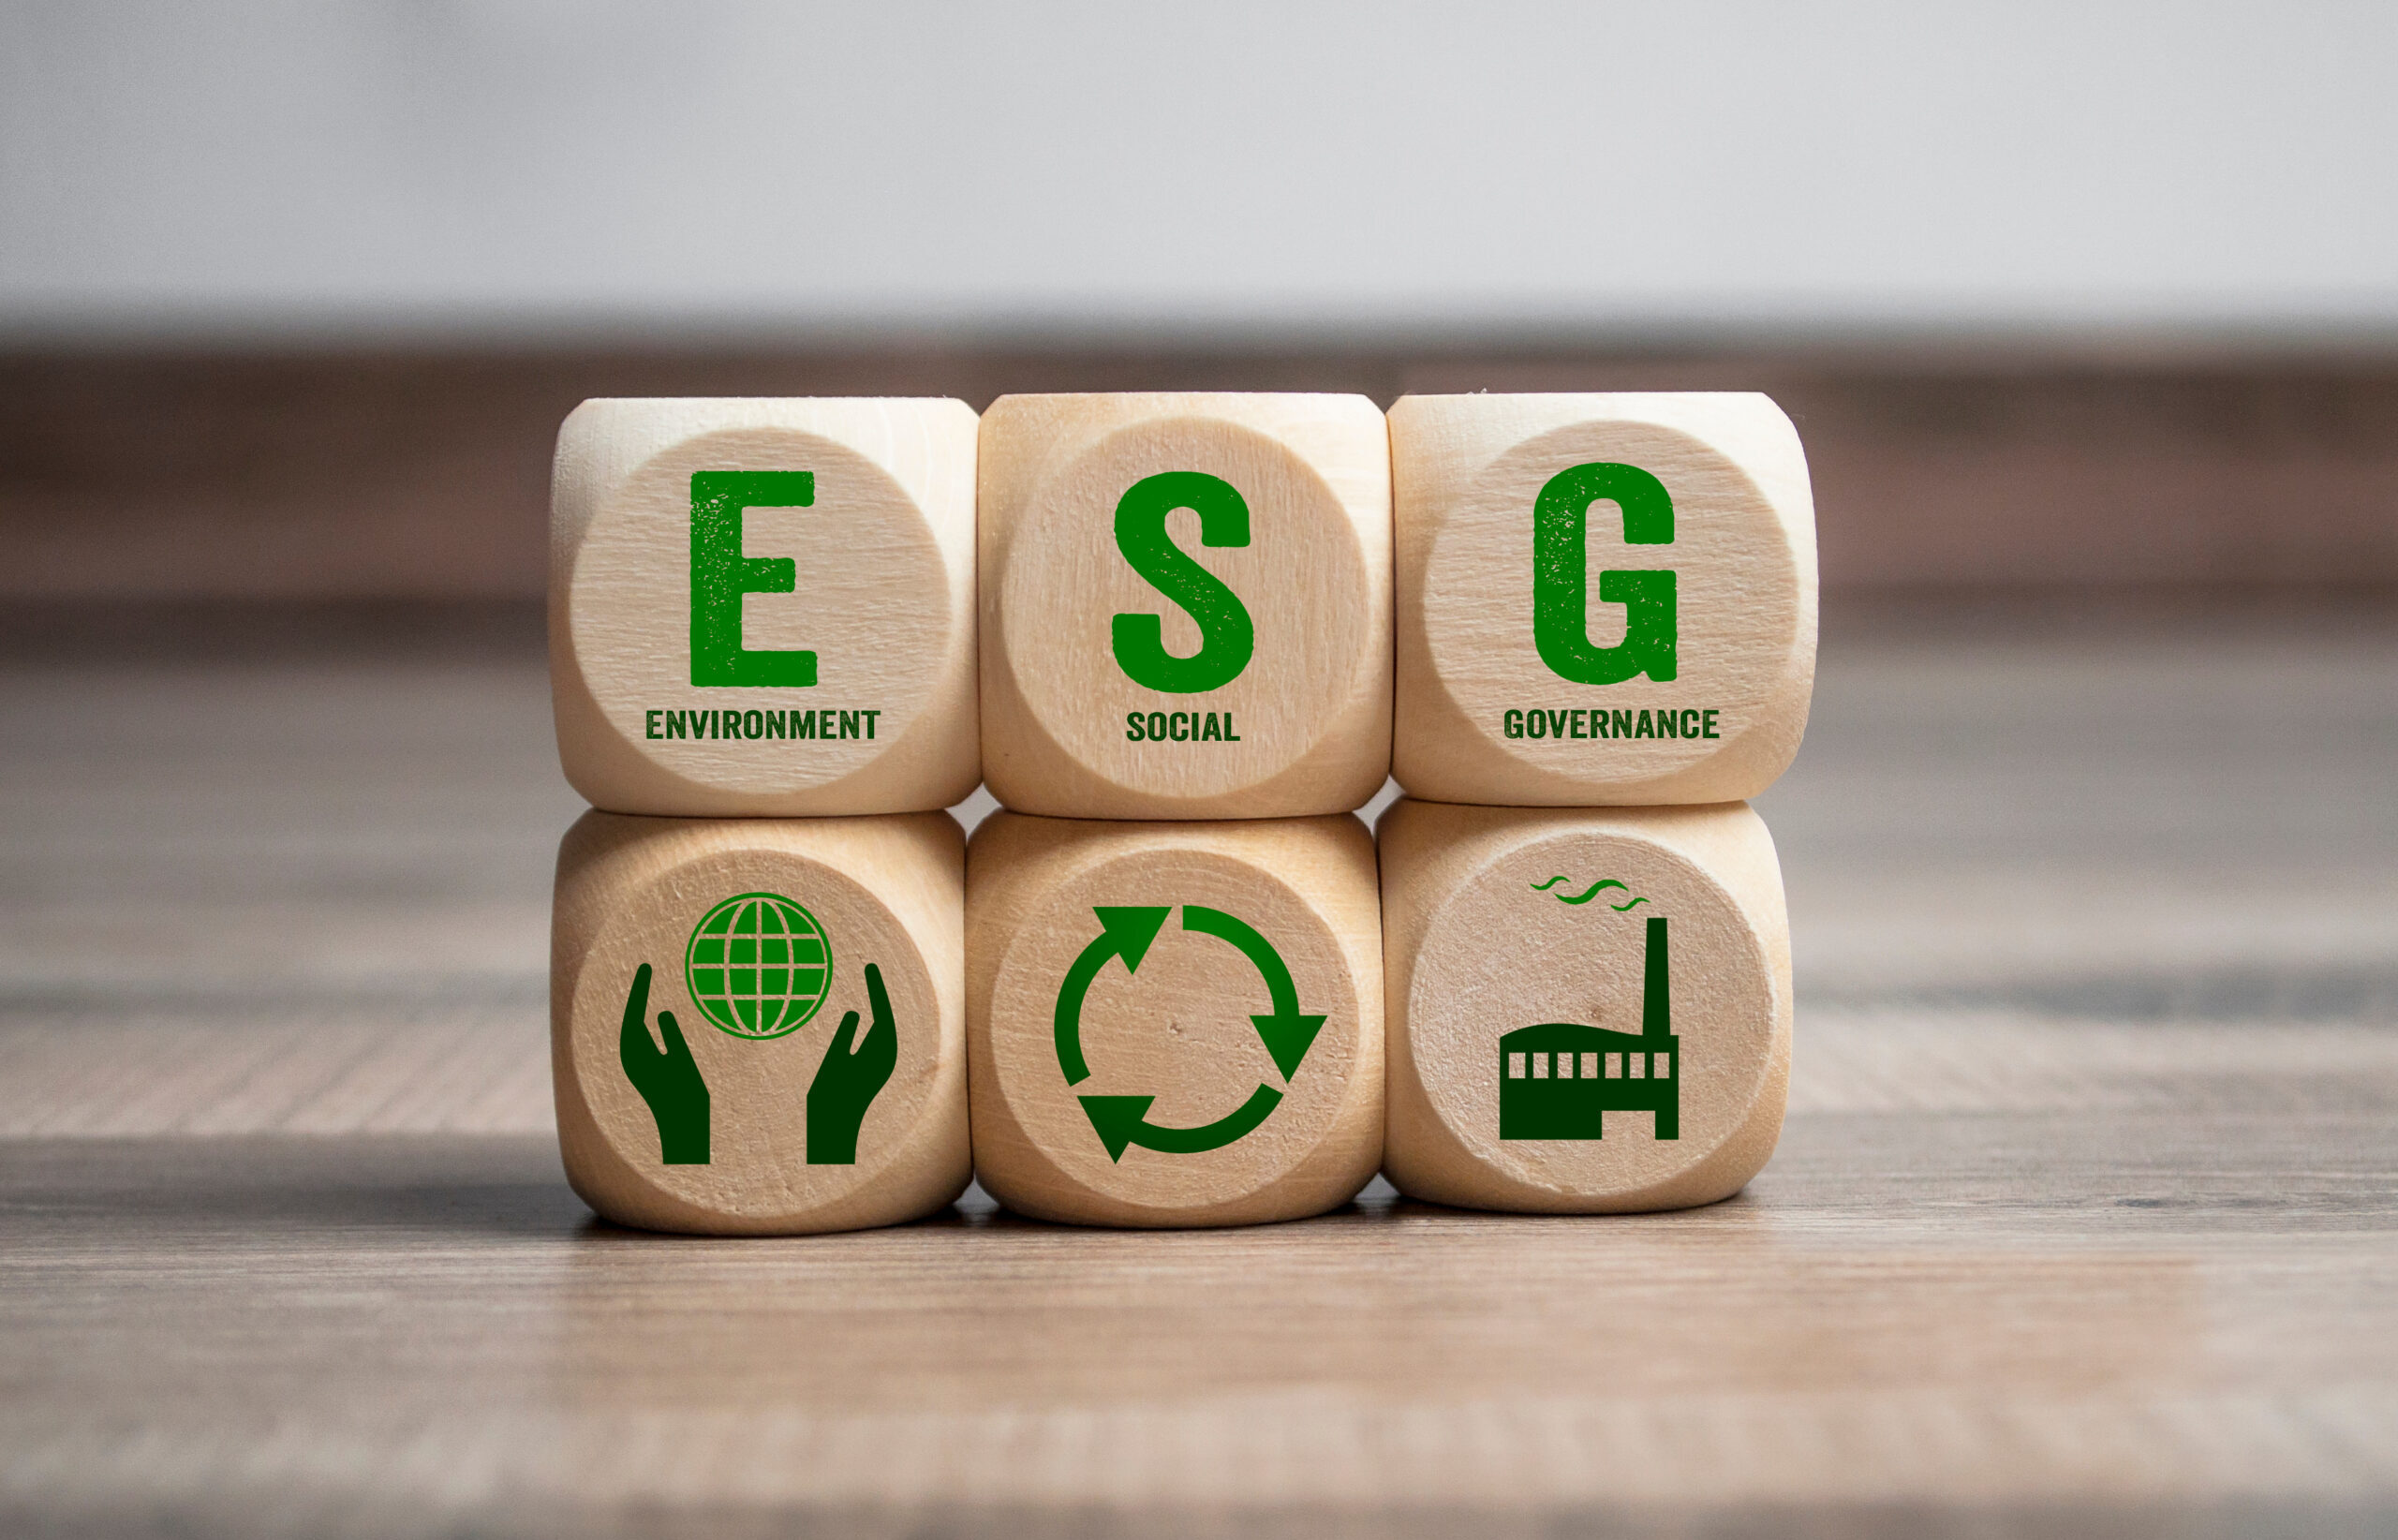 IDW fordert mehr Transparenz bei ESG-Ratings